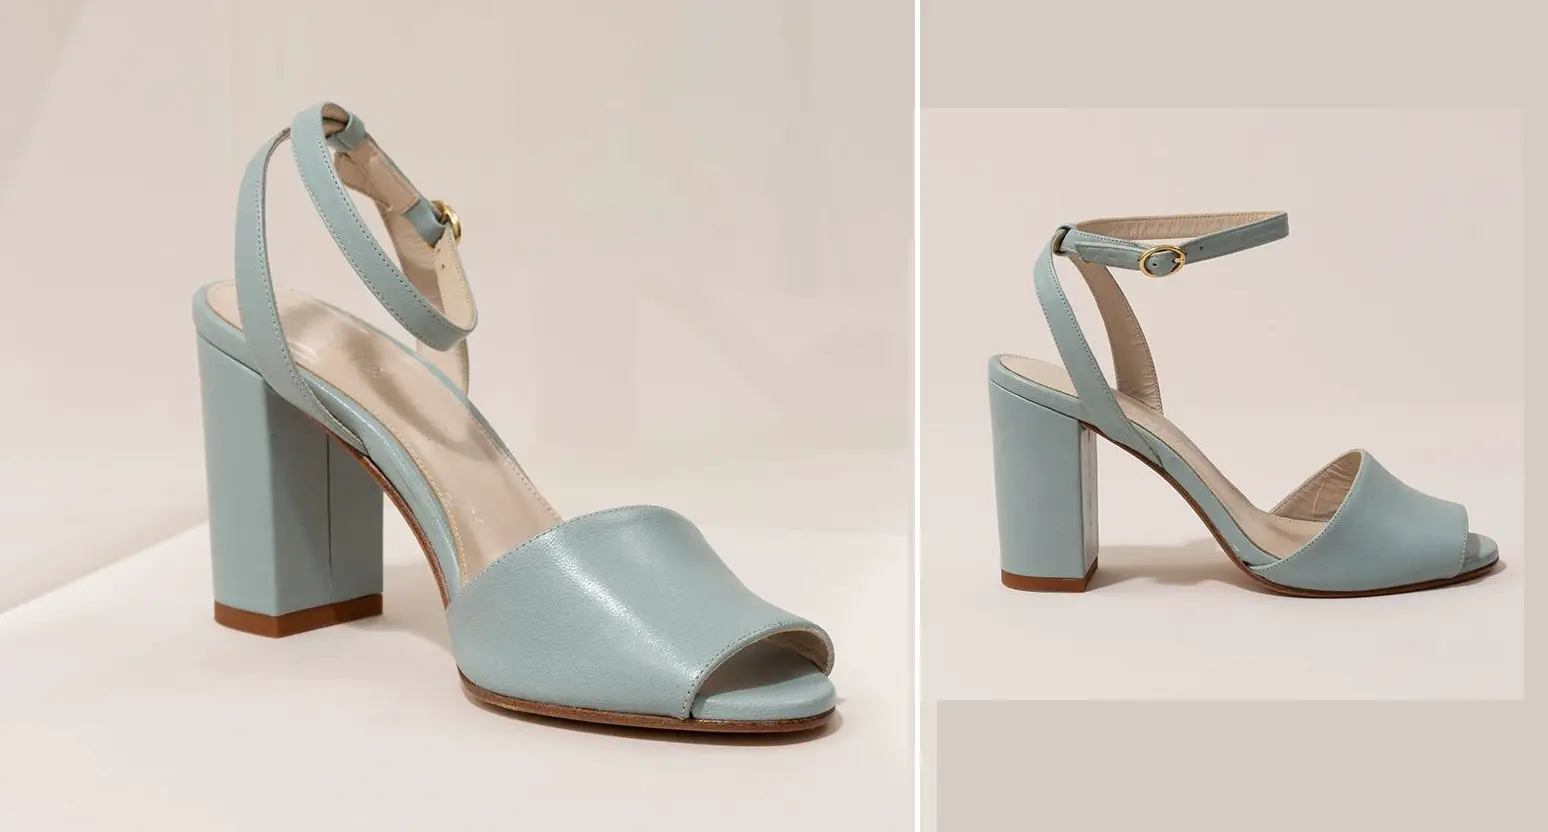 Queen Letizia of Spain wore Mint Roses Adriatic Arlena wide heeled peep toe sandals1